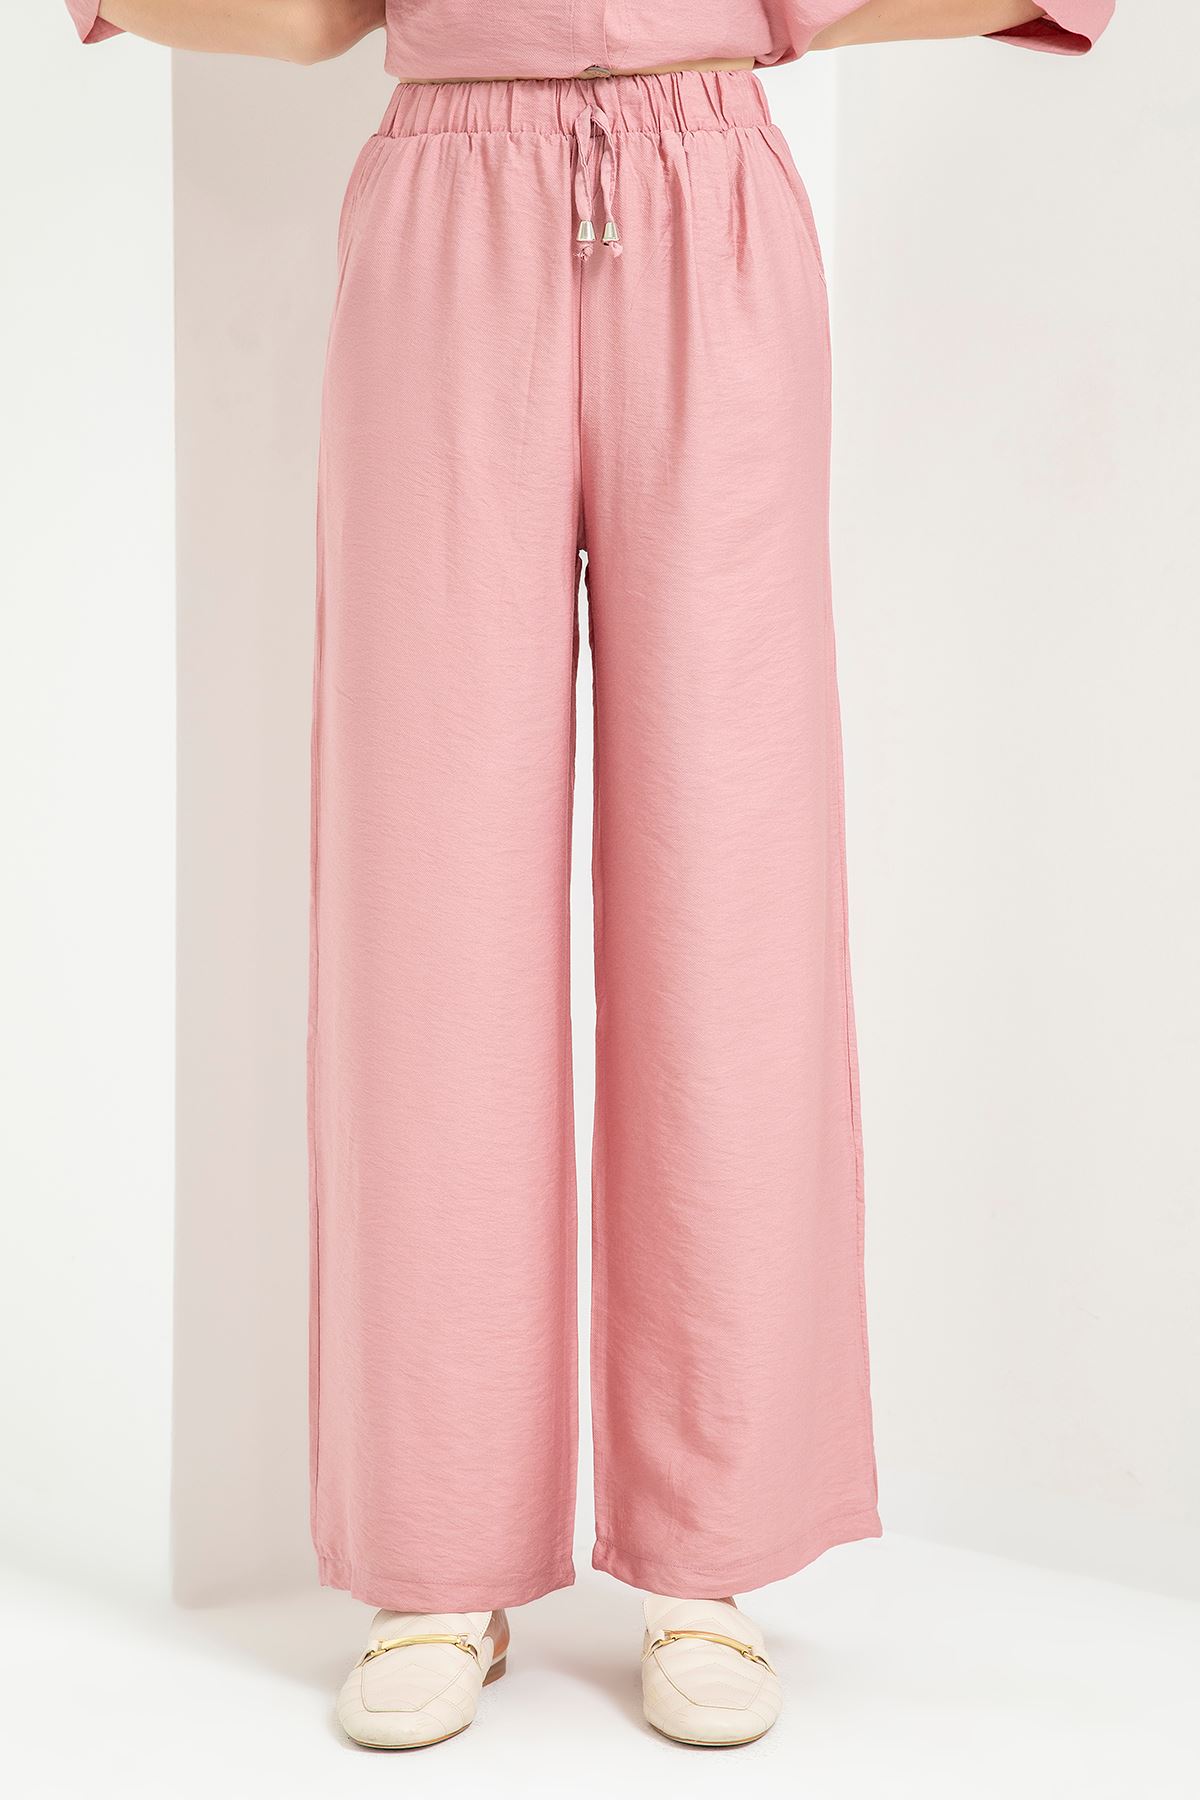 Aerobin Fabric Long Wide Elastic Waist Women'S Trouser - Rose 